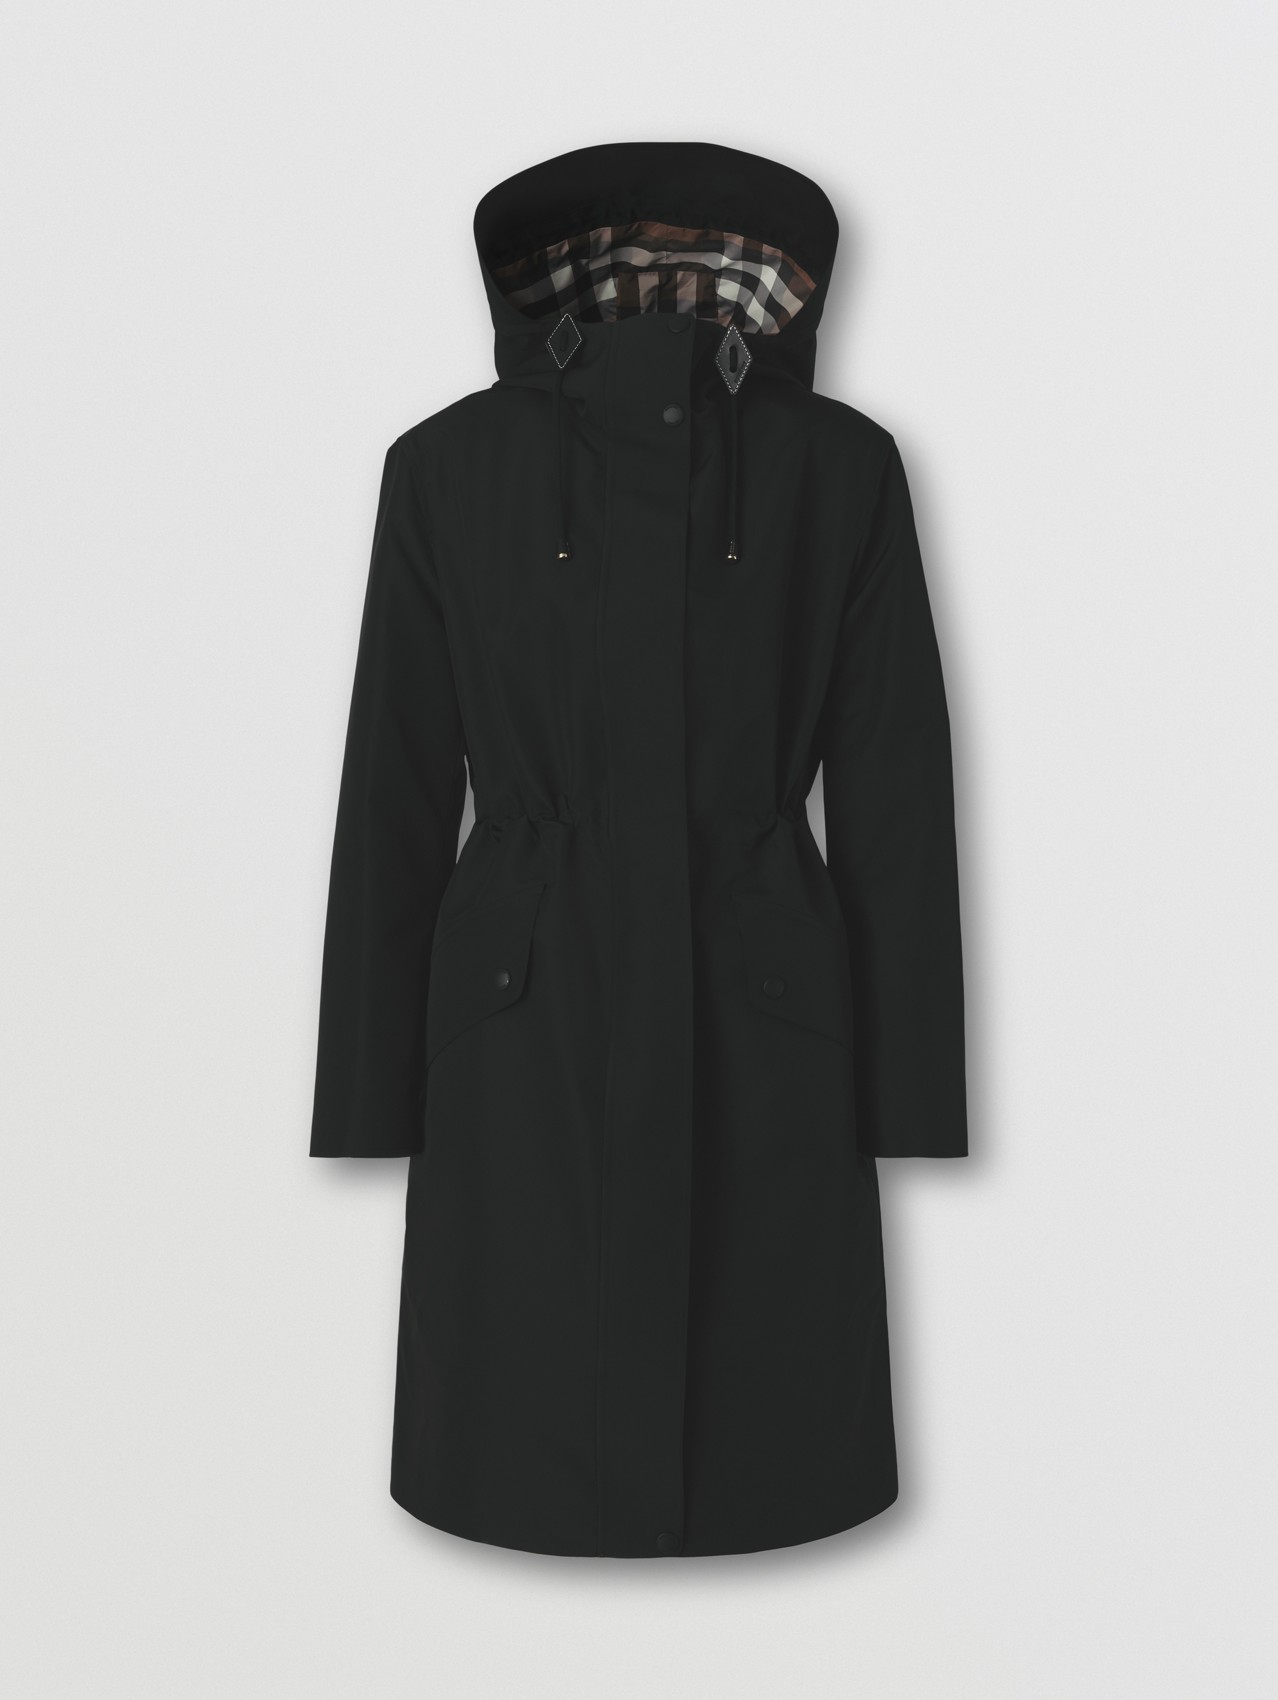 Nylon Hooded Jacket in Black